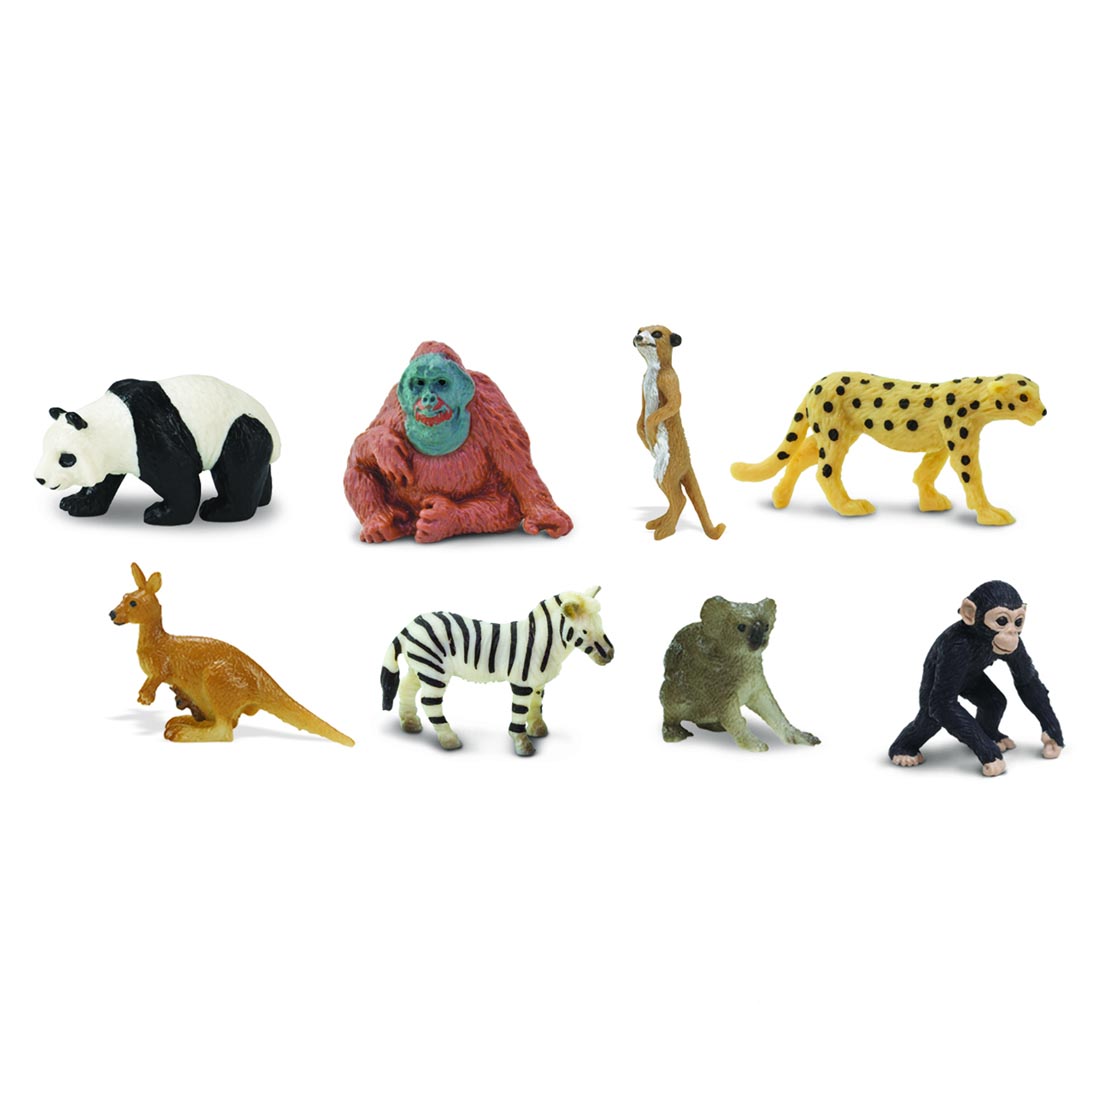 Exotic Animal Mini Figurines include panda, orangutan, meerkat, cheetah, kangaroo, zebra, koala and chimpanzee